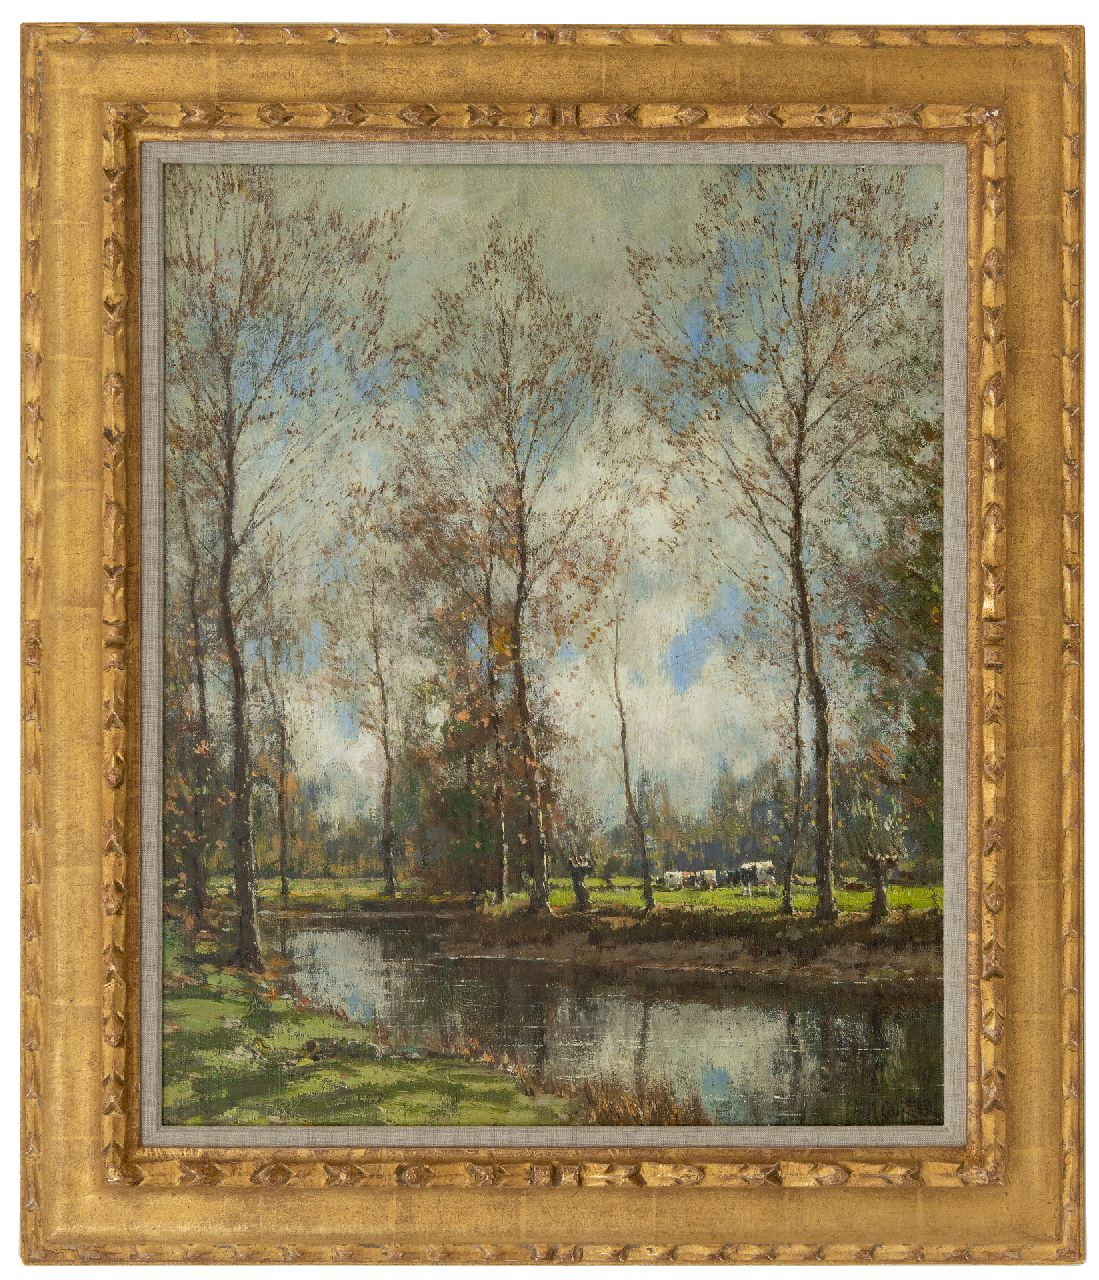 Gorter A.M.  | 'Arnold' Marc Gorter, The Vordense beek, oil on canvas 55.9 x 45.7 cm, signed l.r.